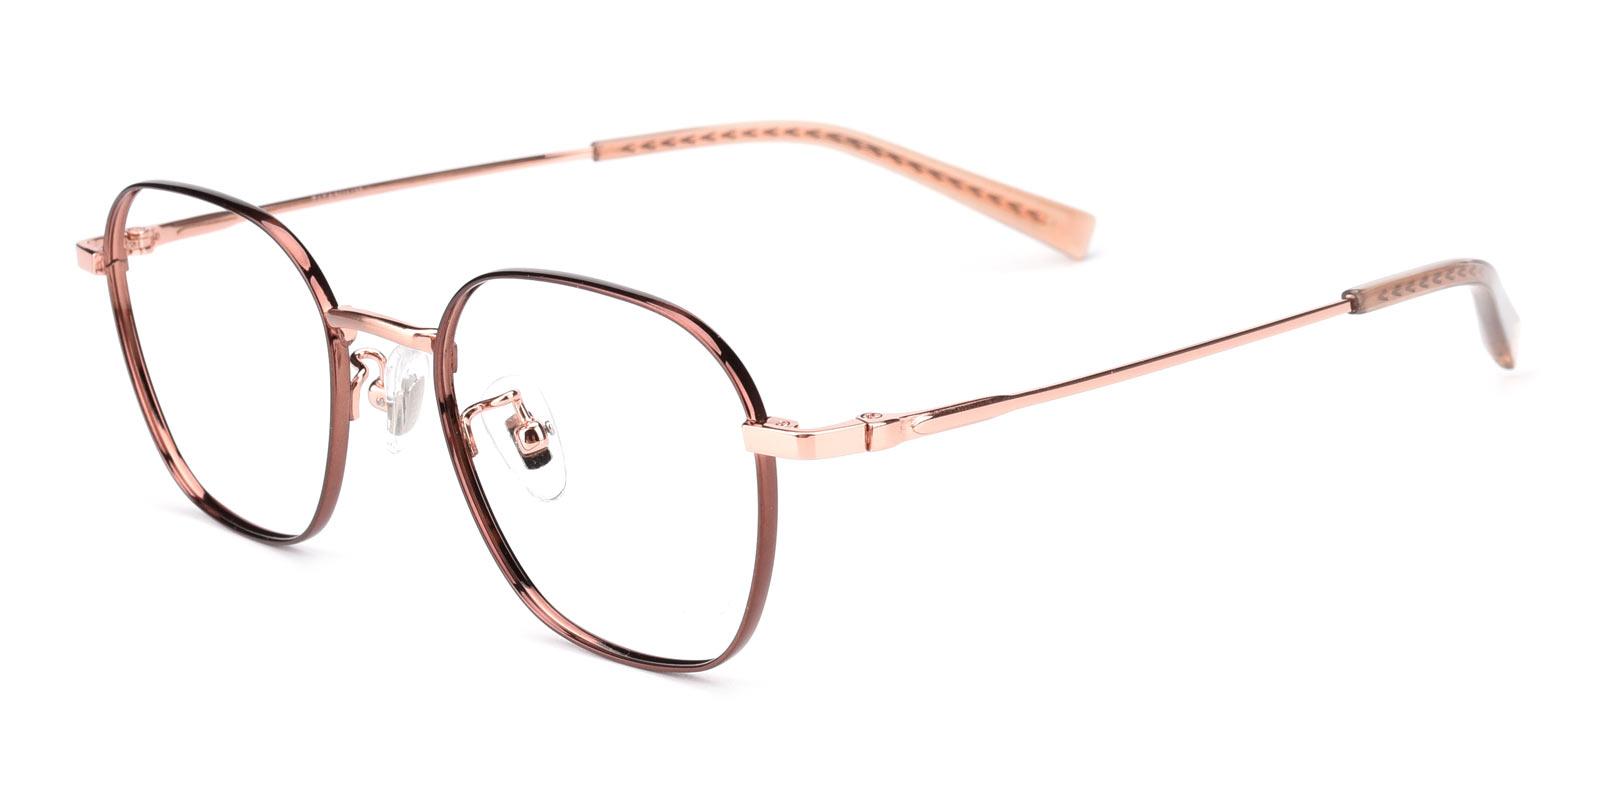 Fog-Brown-Rectangle / Square-Titanium-Eyeglasses-detail